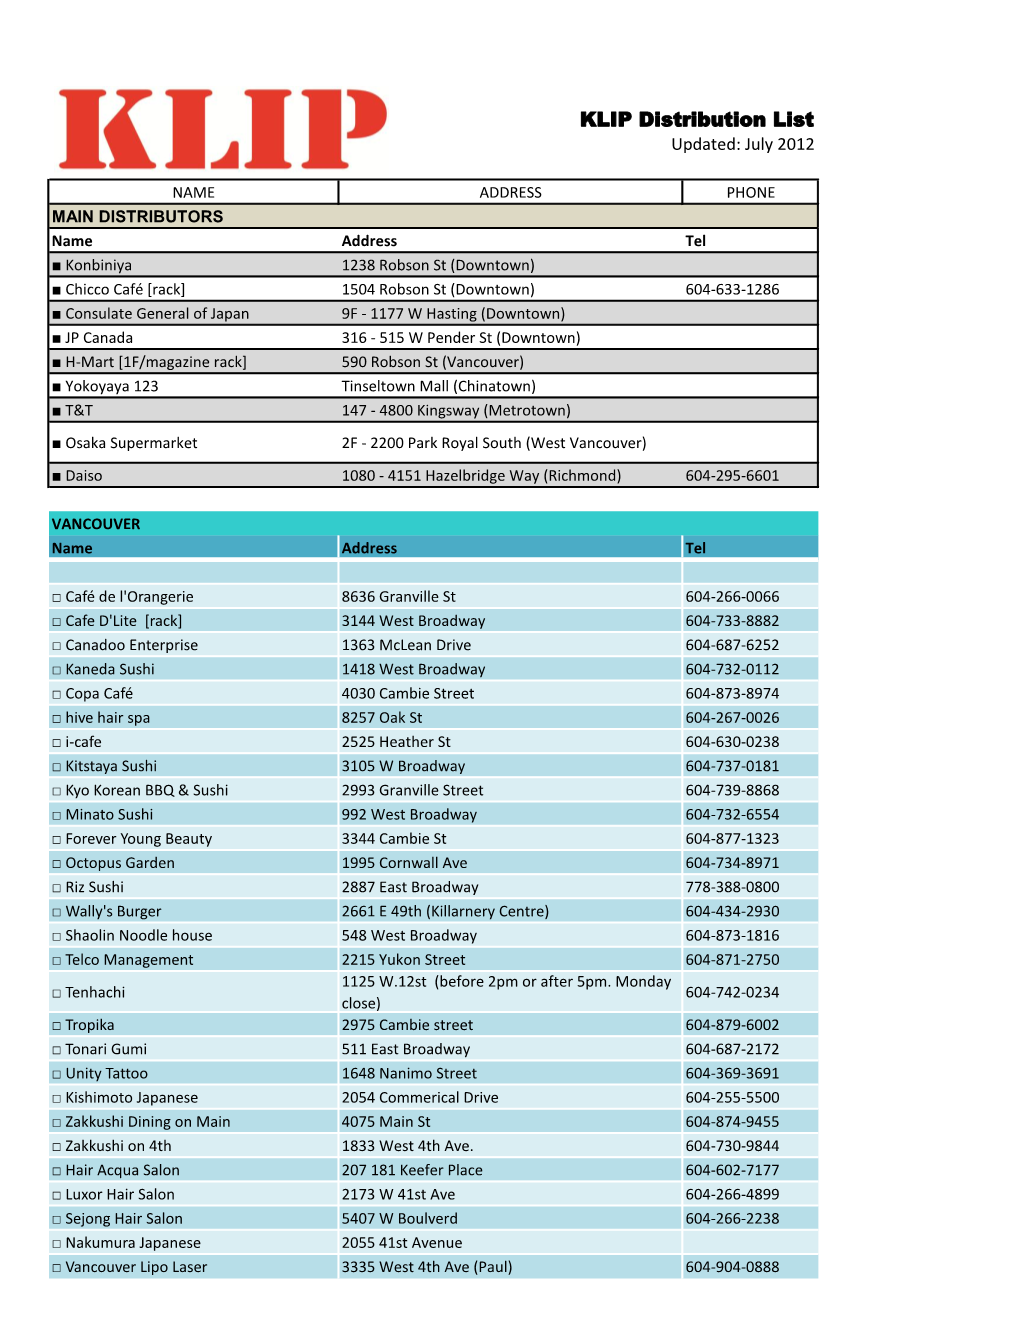 KLIP Distribution List Updated: July 2012